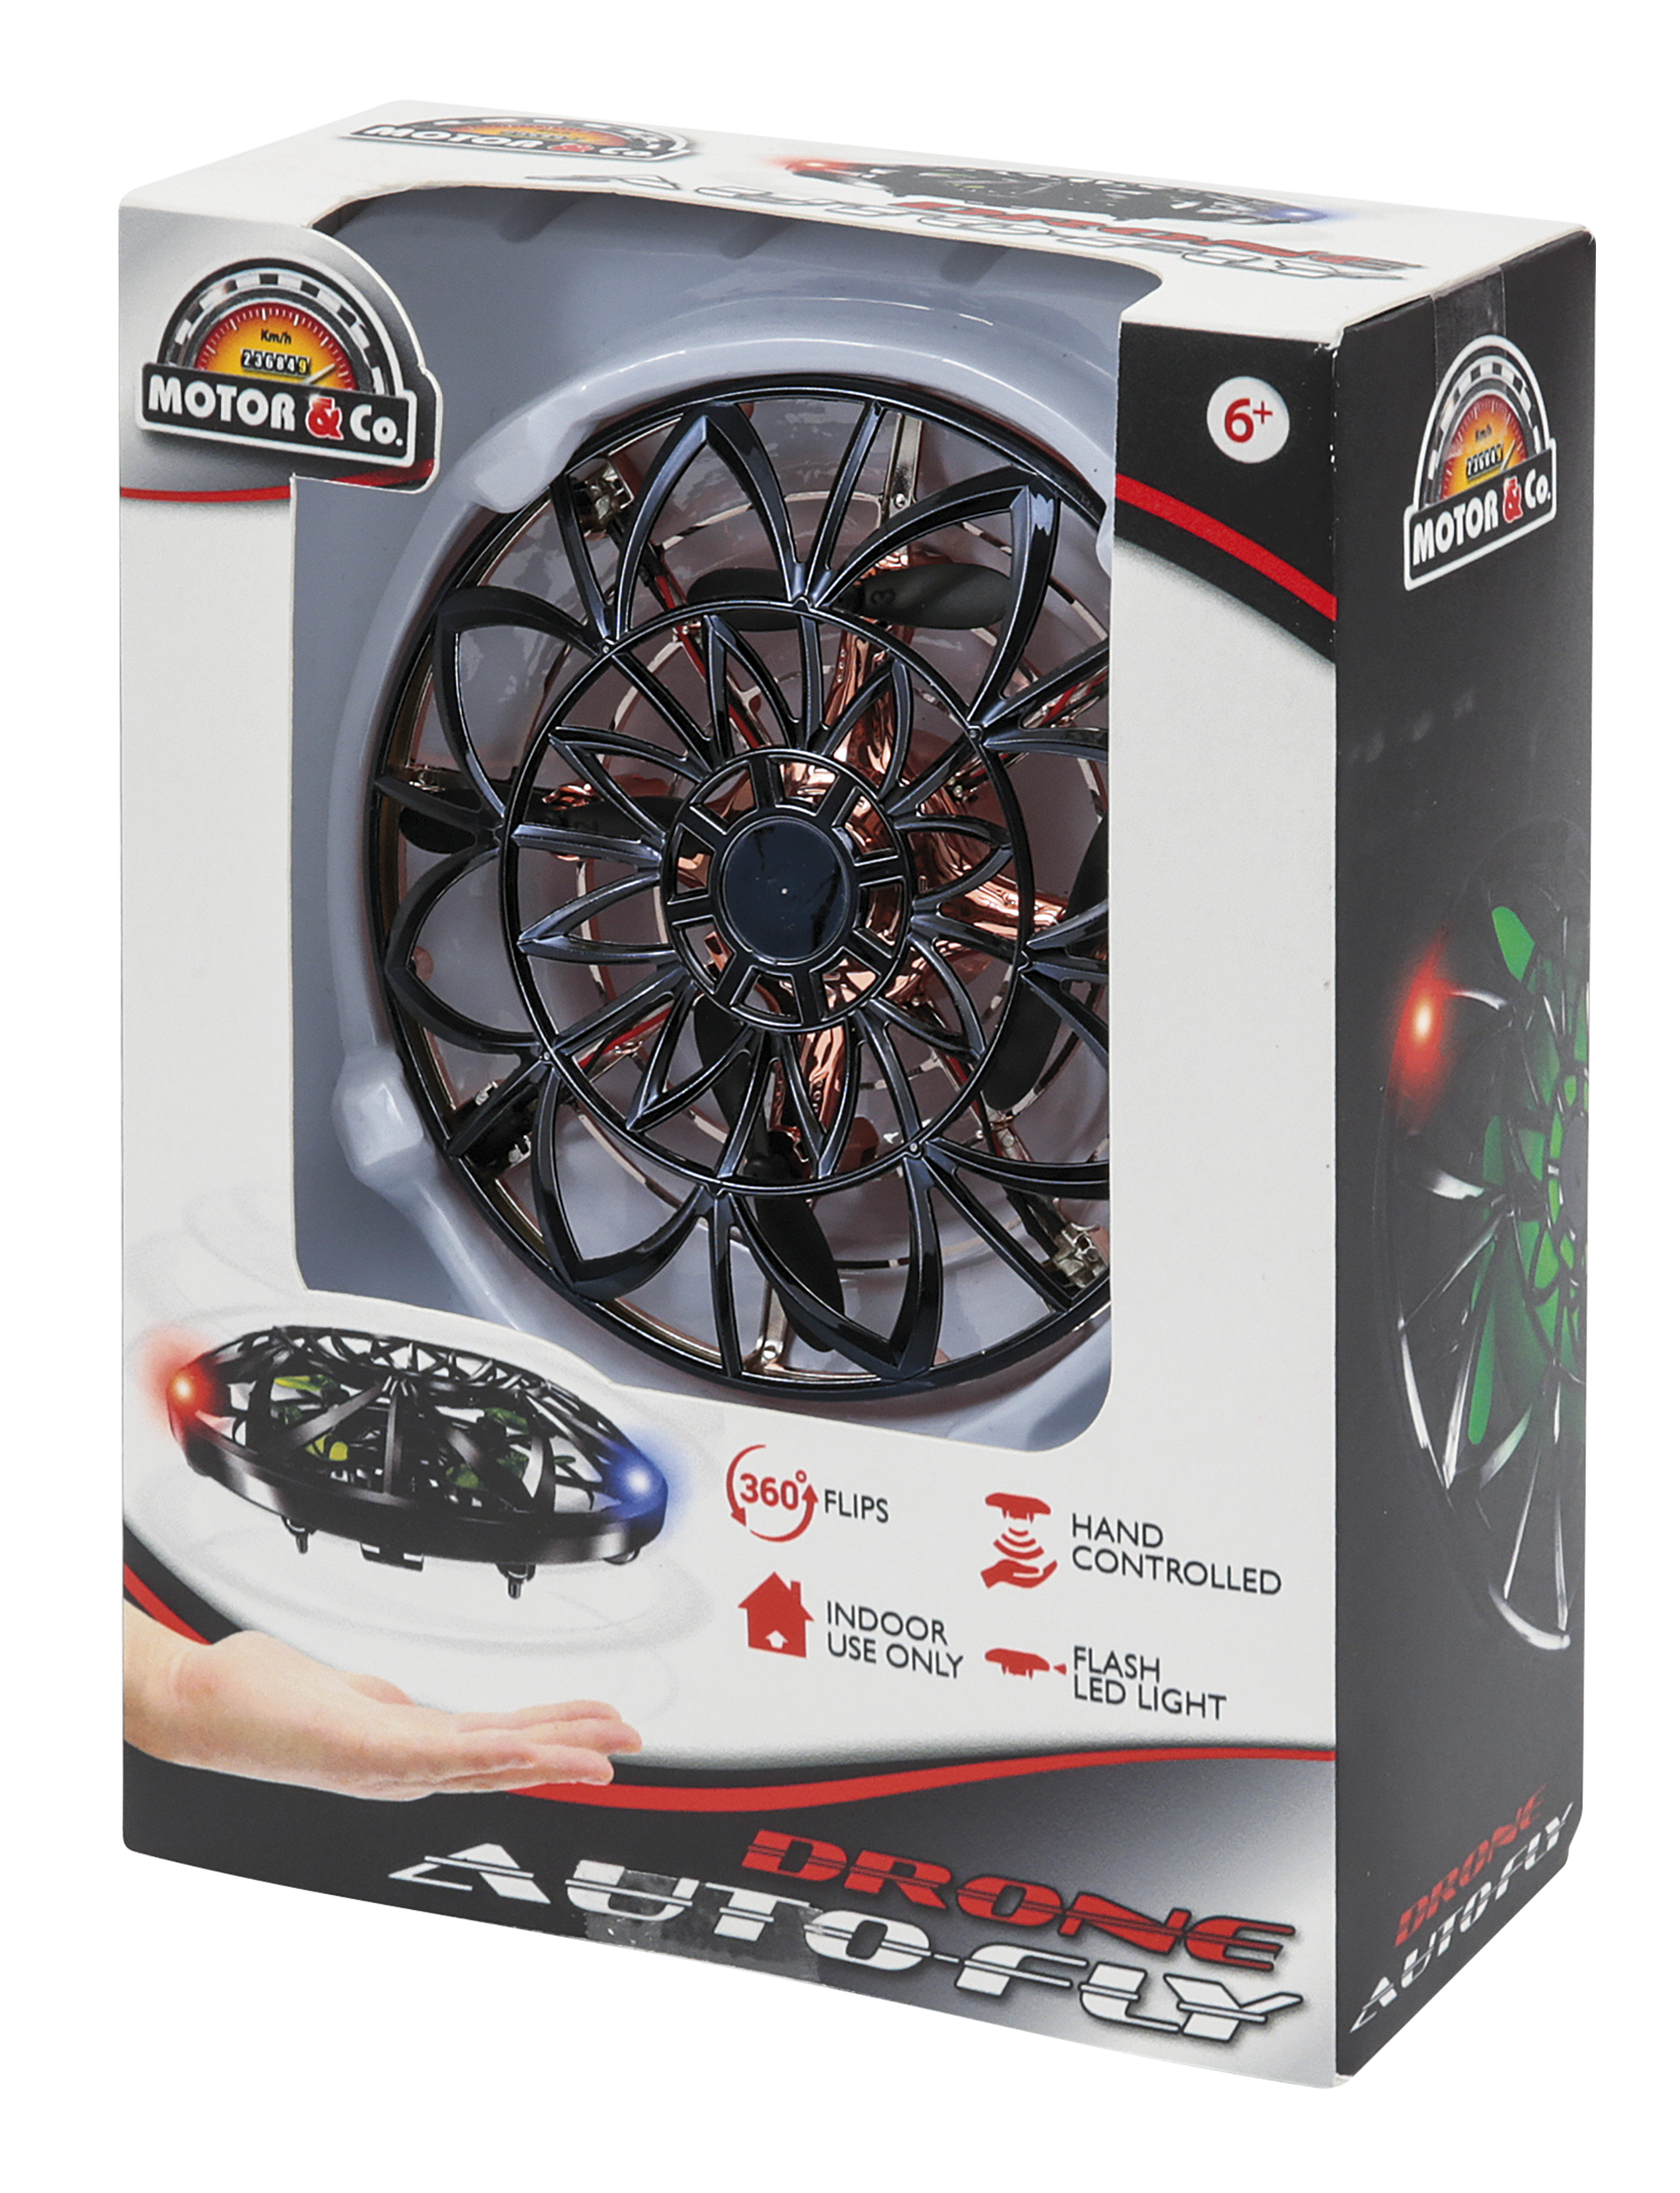 Motor & Co -drone auto-fly - Motor & Co